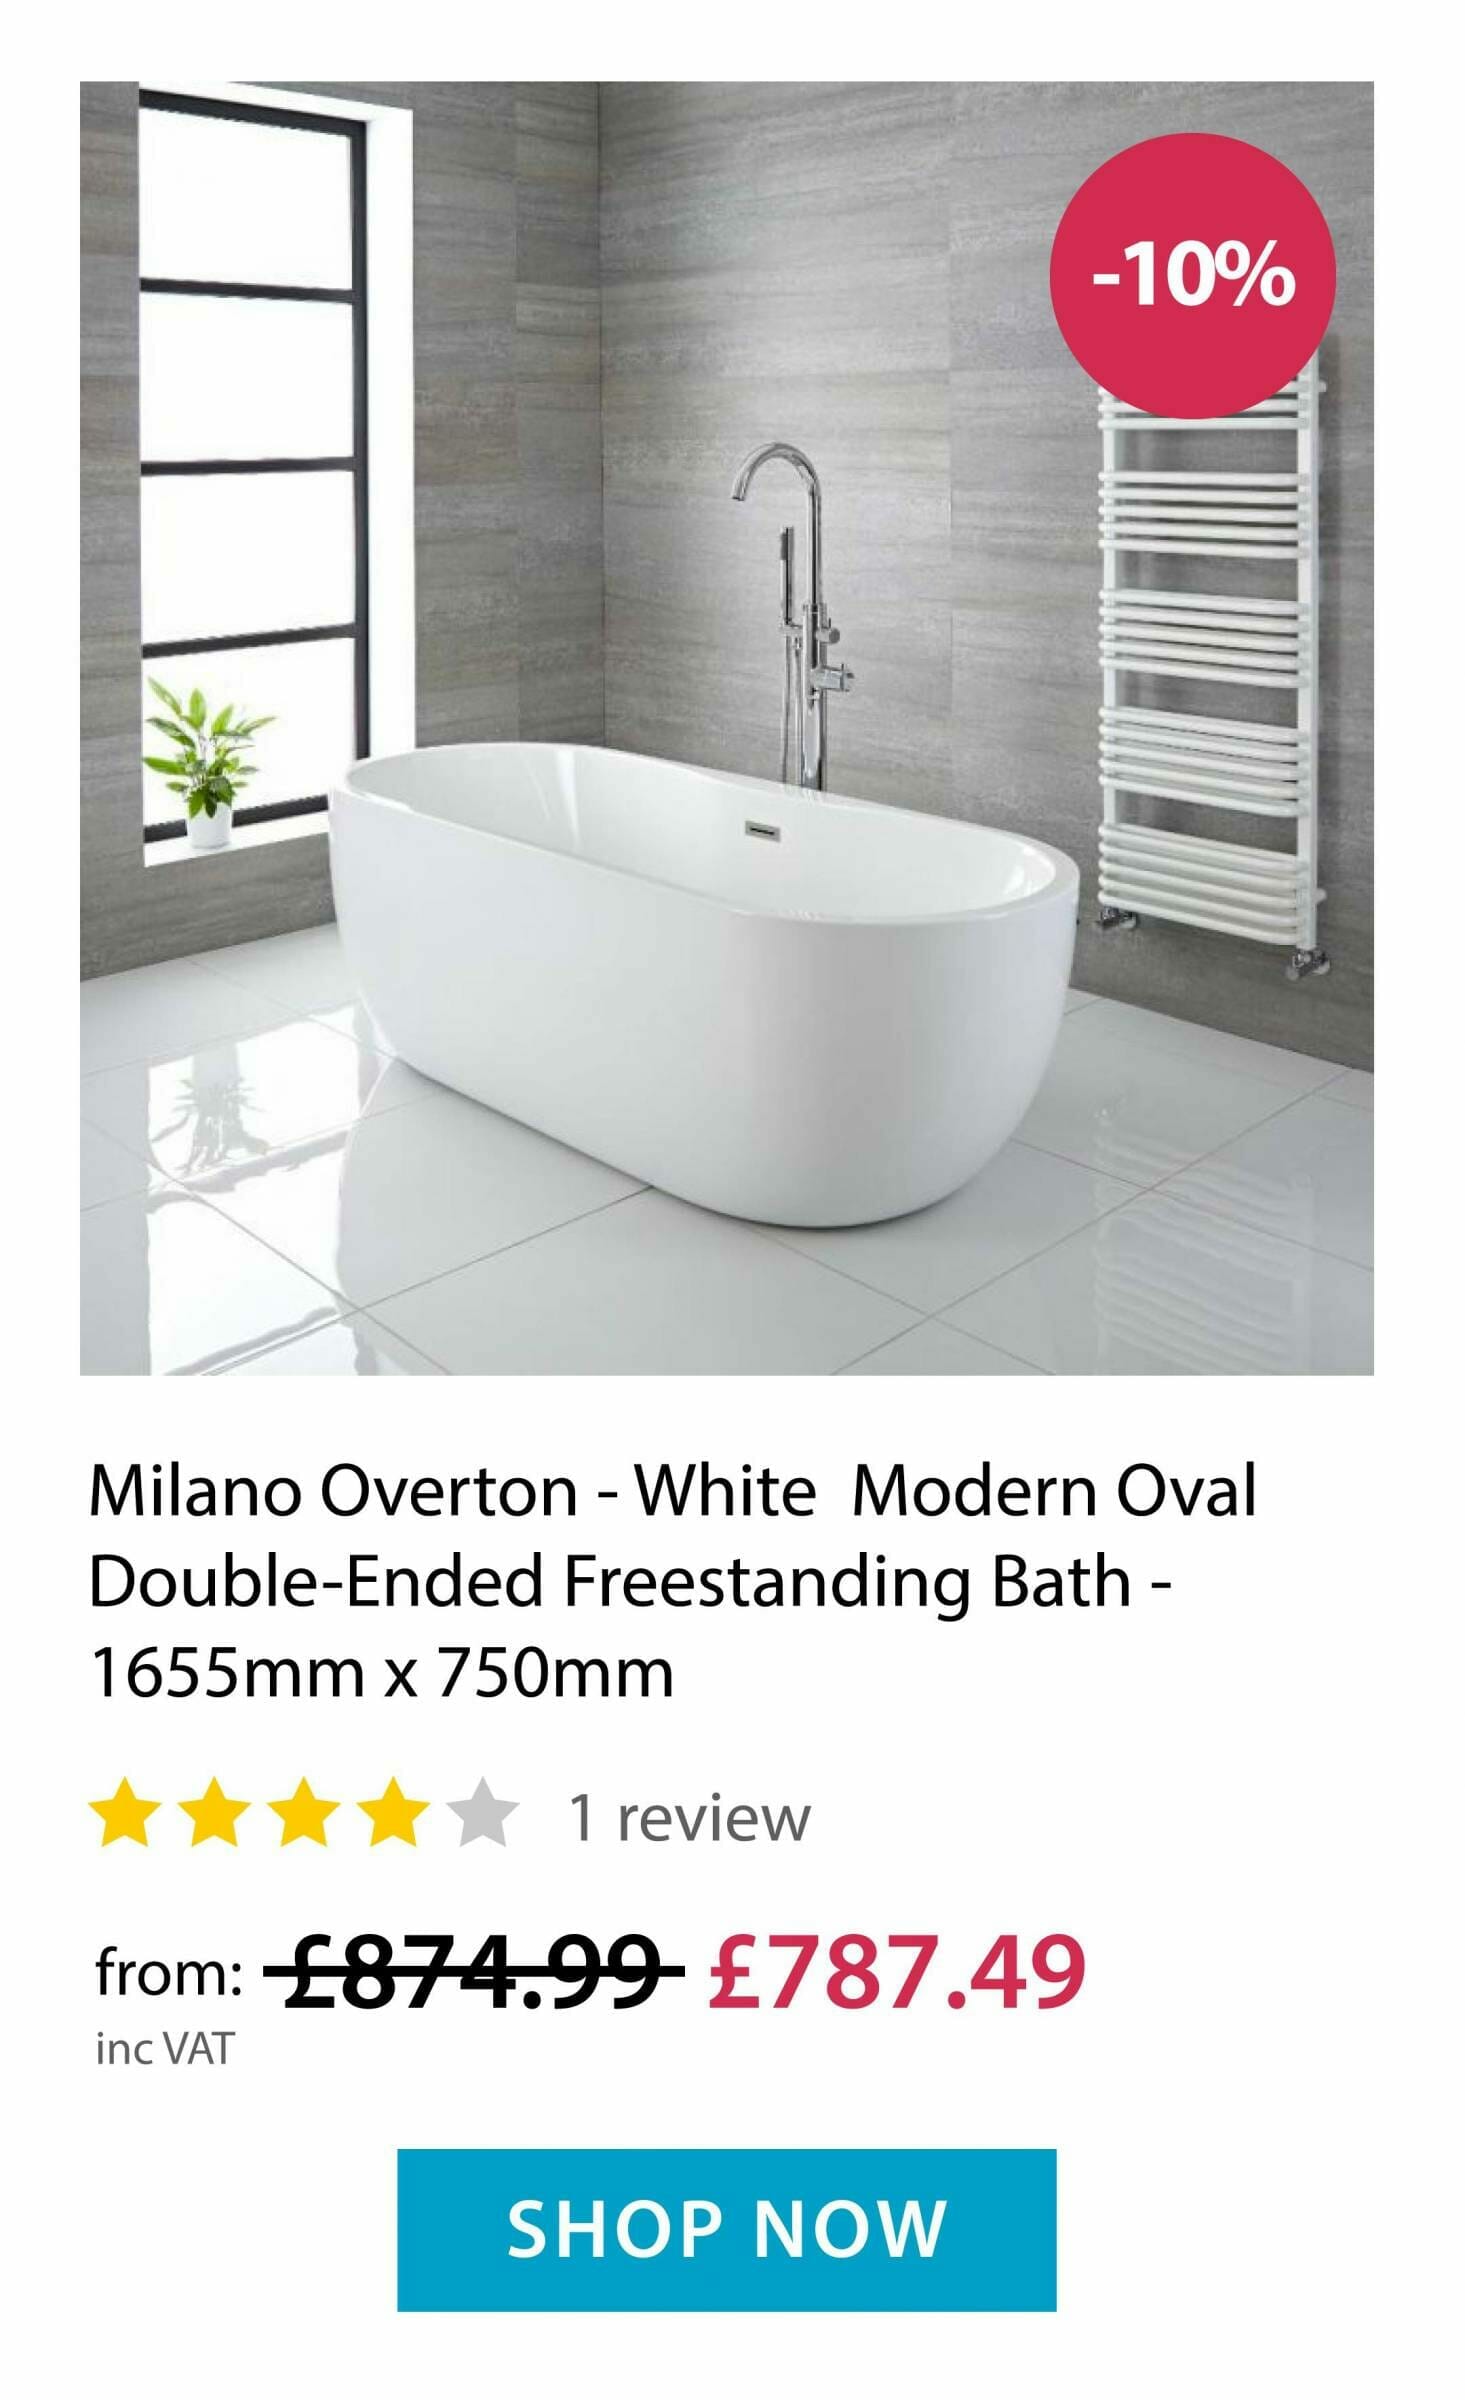 Milano Overton - Freestanding Bath